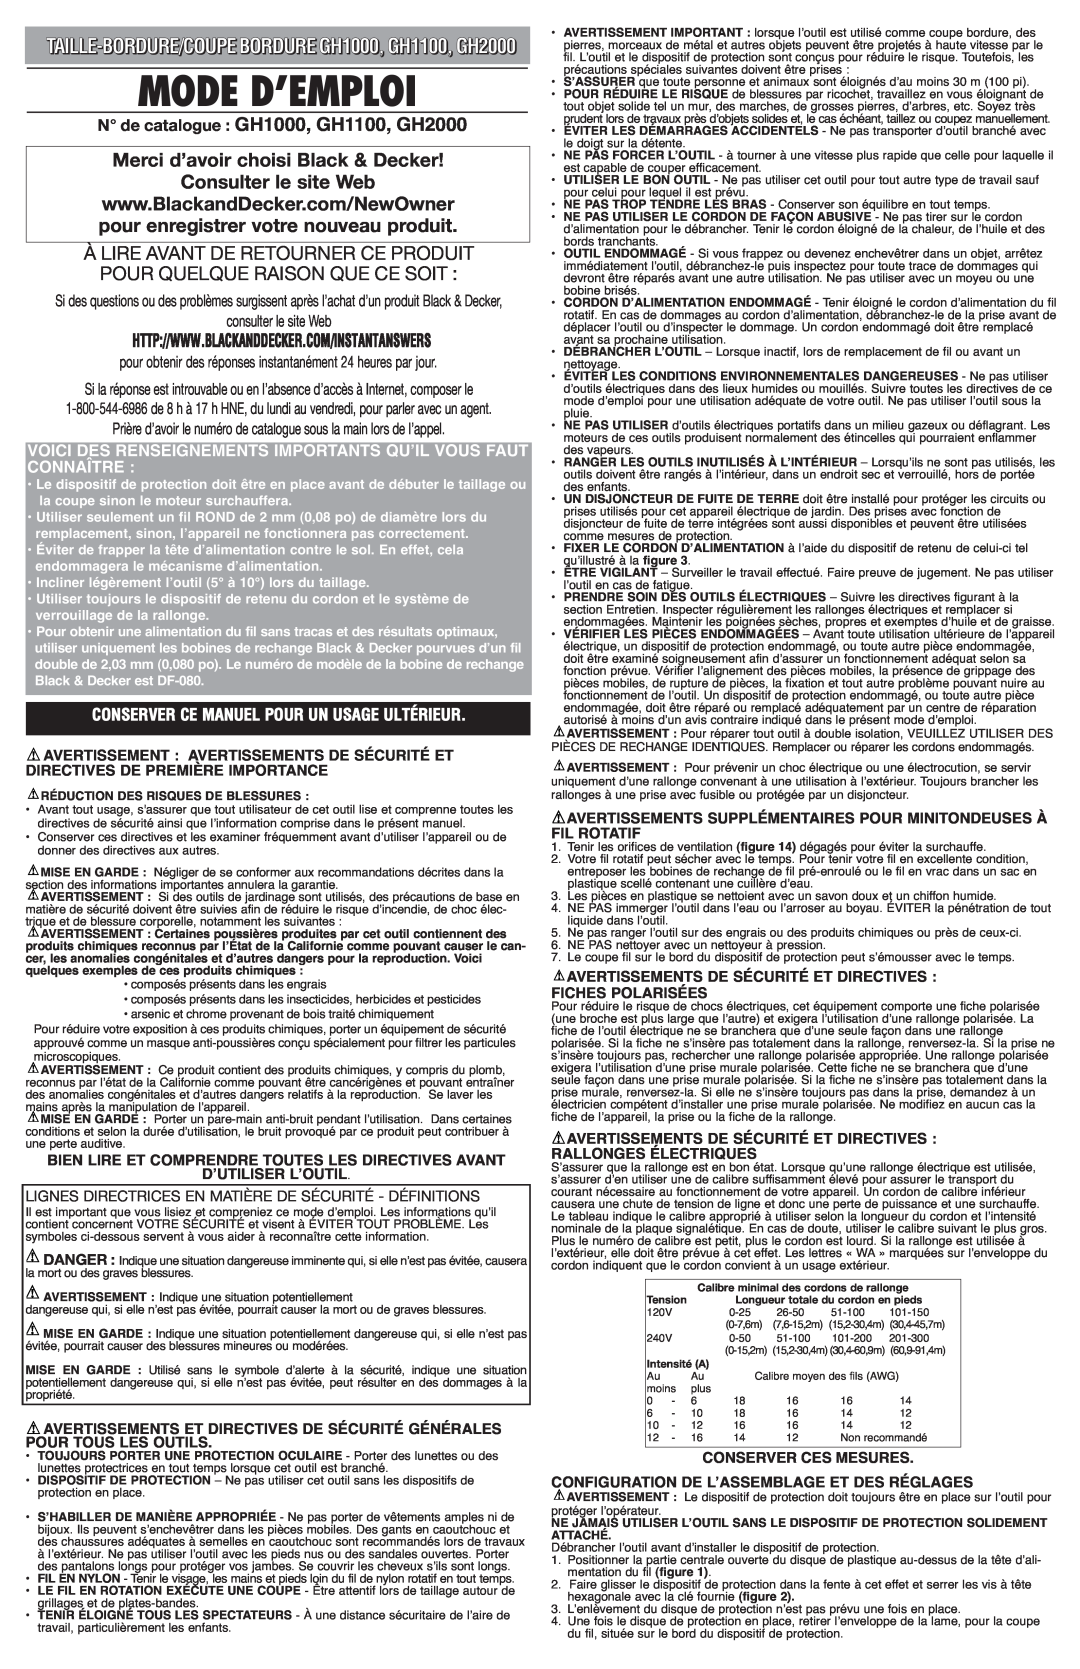 Black & Decker instruction manual Mode D’Emploi, N de catalogue GH1000, GH1100, GH2000, Connaître 